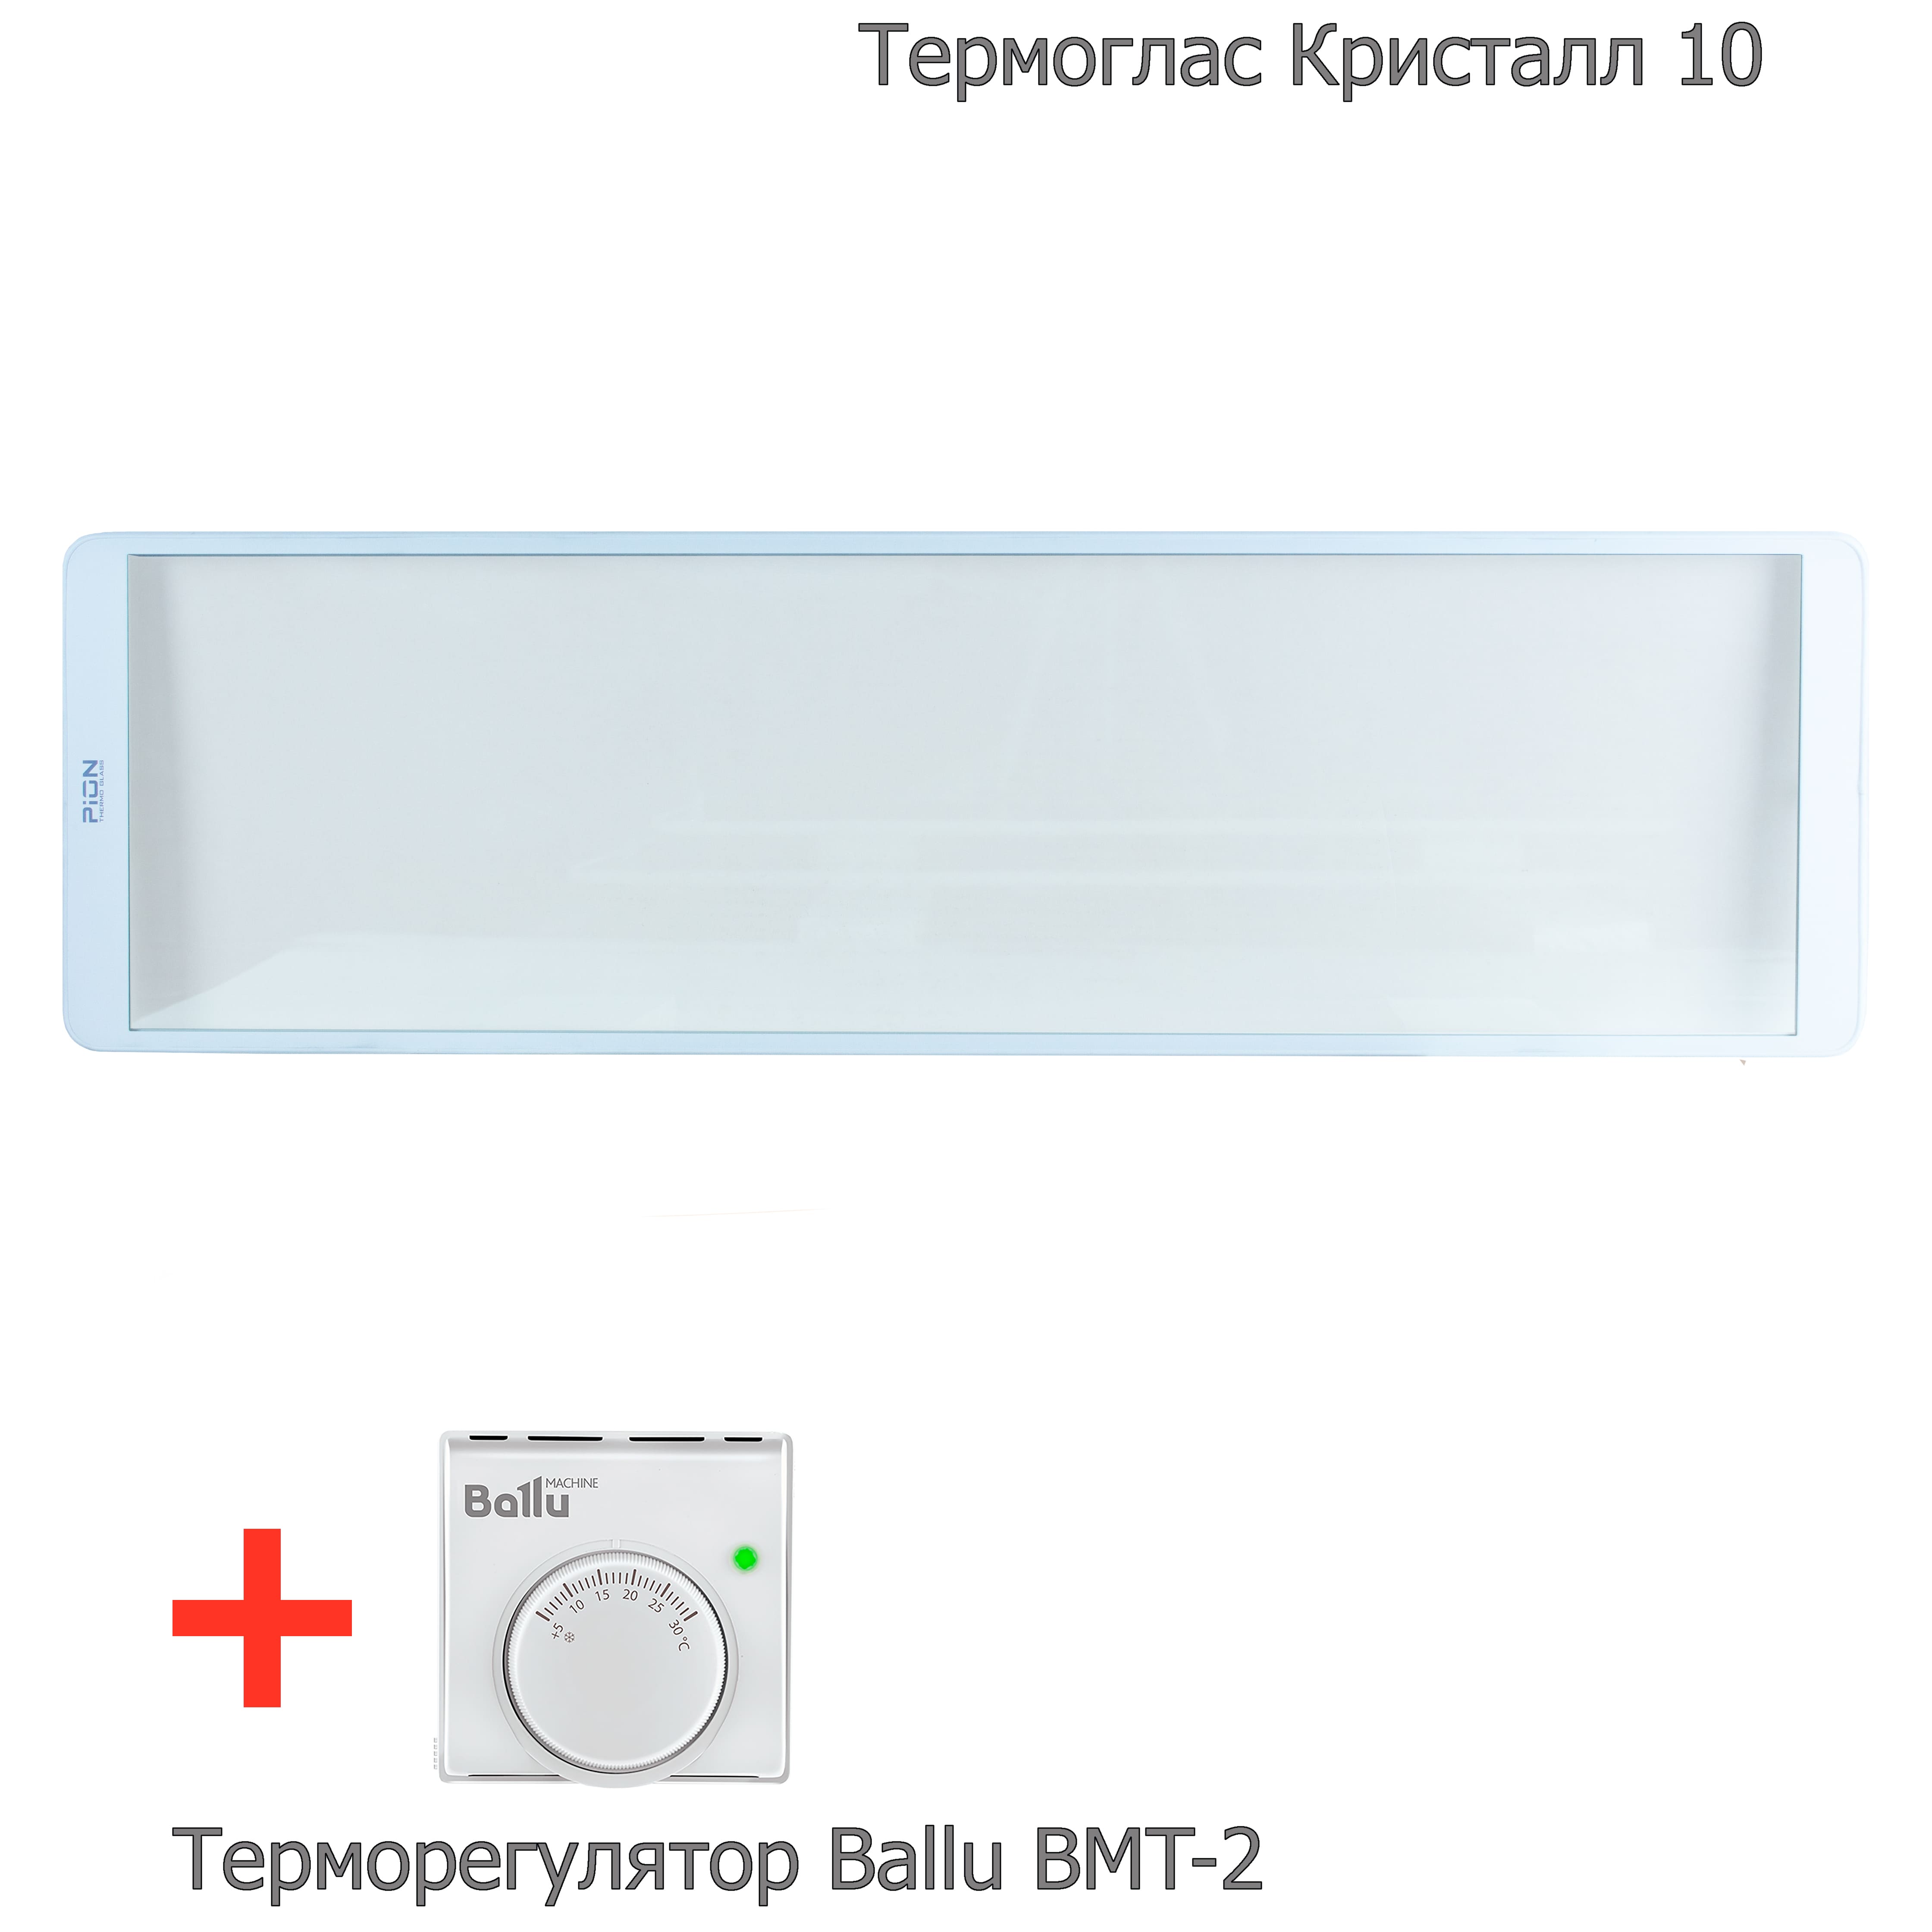 Потолочный обогреватель ПИОН Термоглас Кристалл 10 с терморегулятором Ballu BMT-2